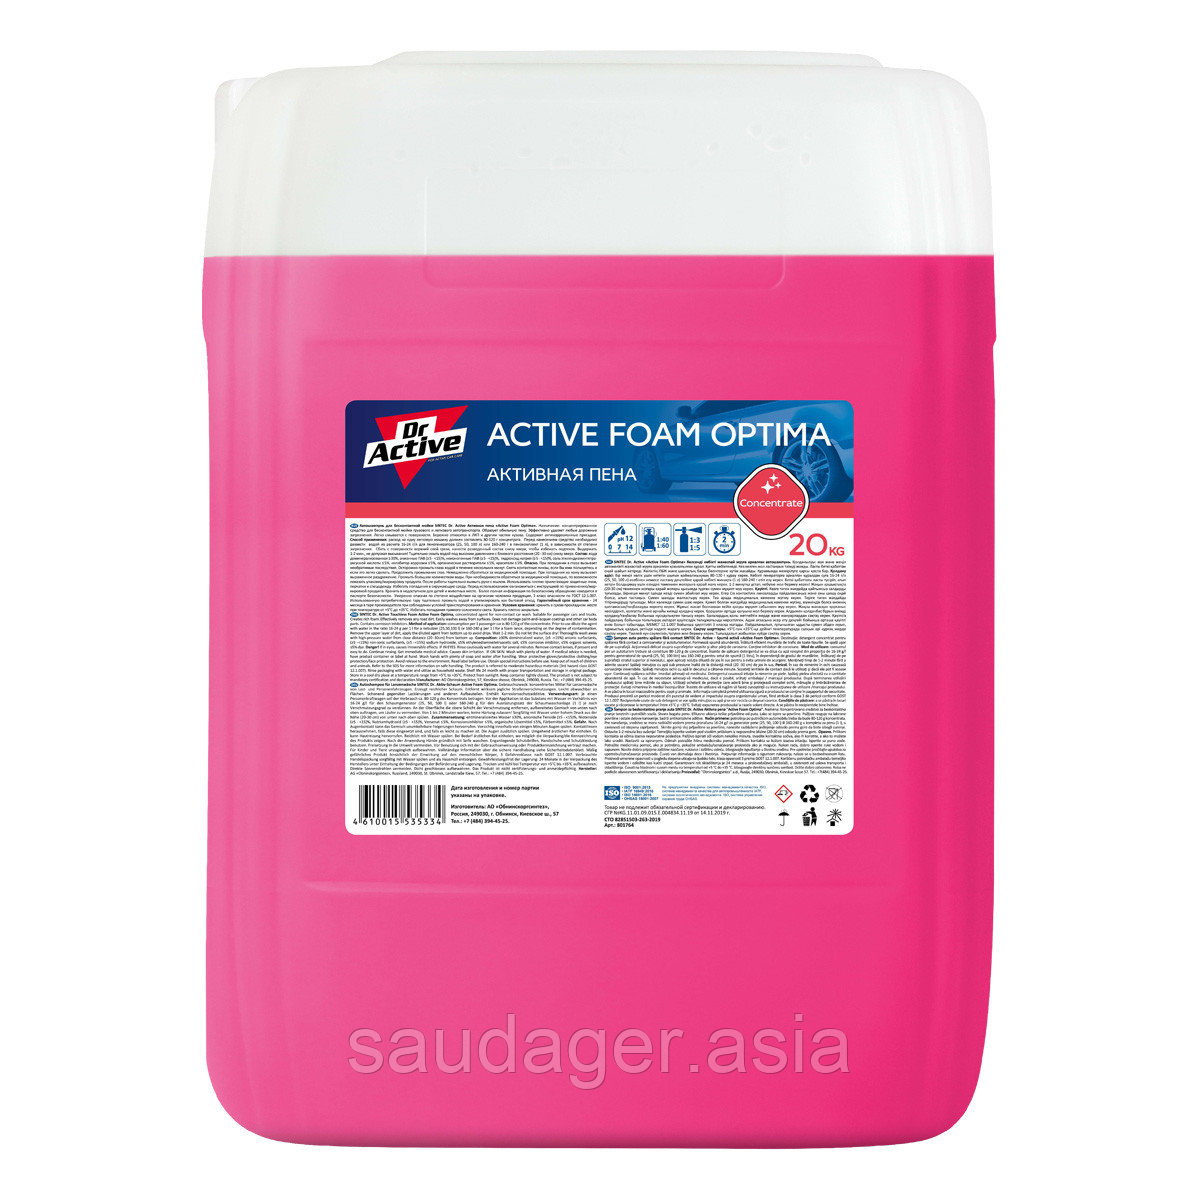 Sintec Dr. Active Активная пена "Active Foam Optima" (20 кг)